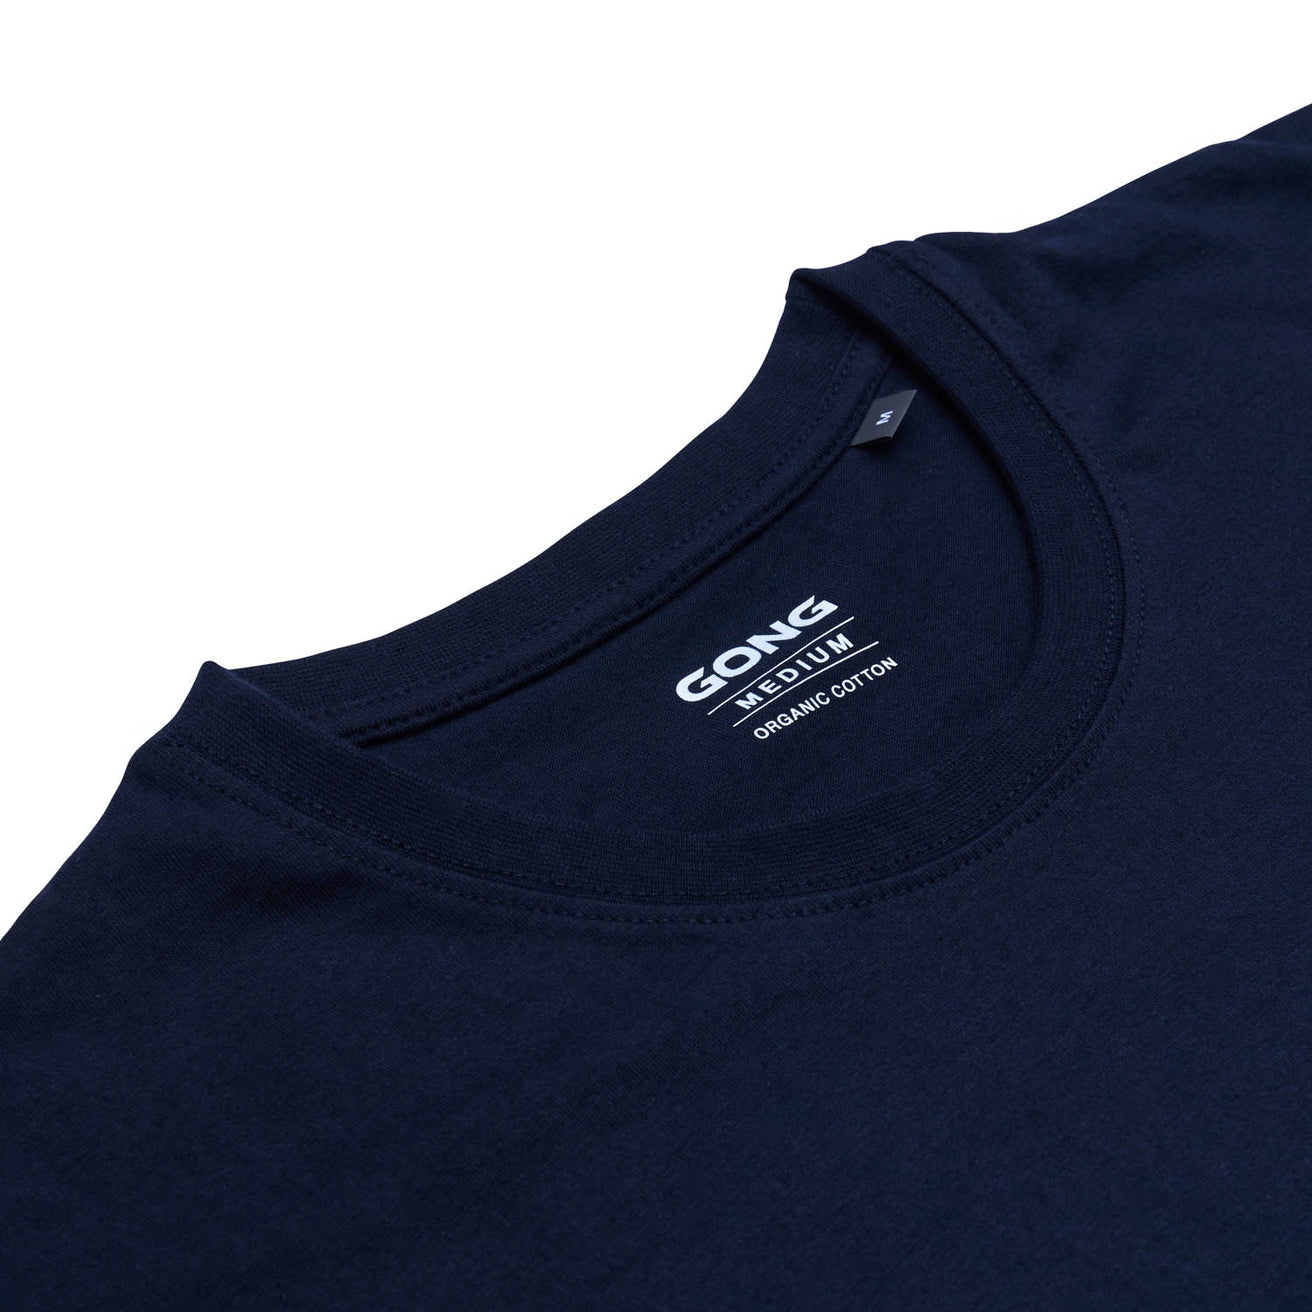 GONG | Tee-Shirt Signature Homme Coton Bio